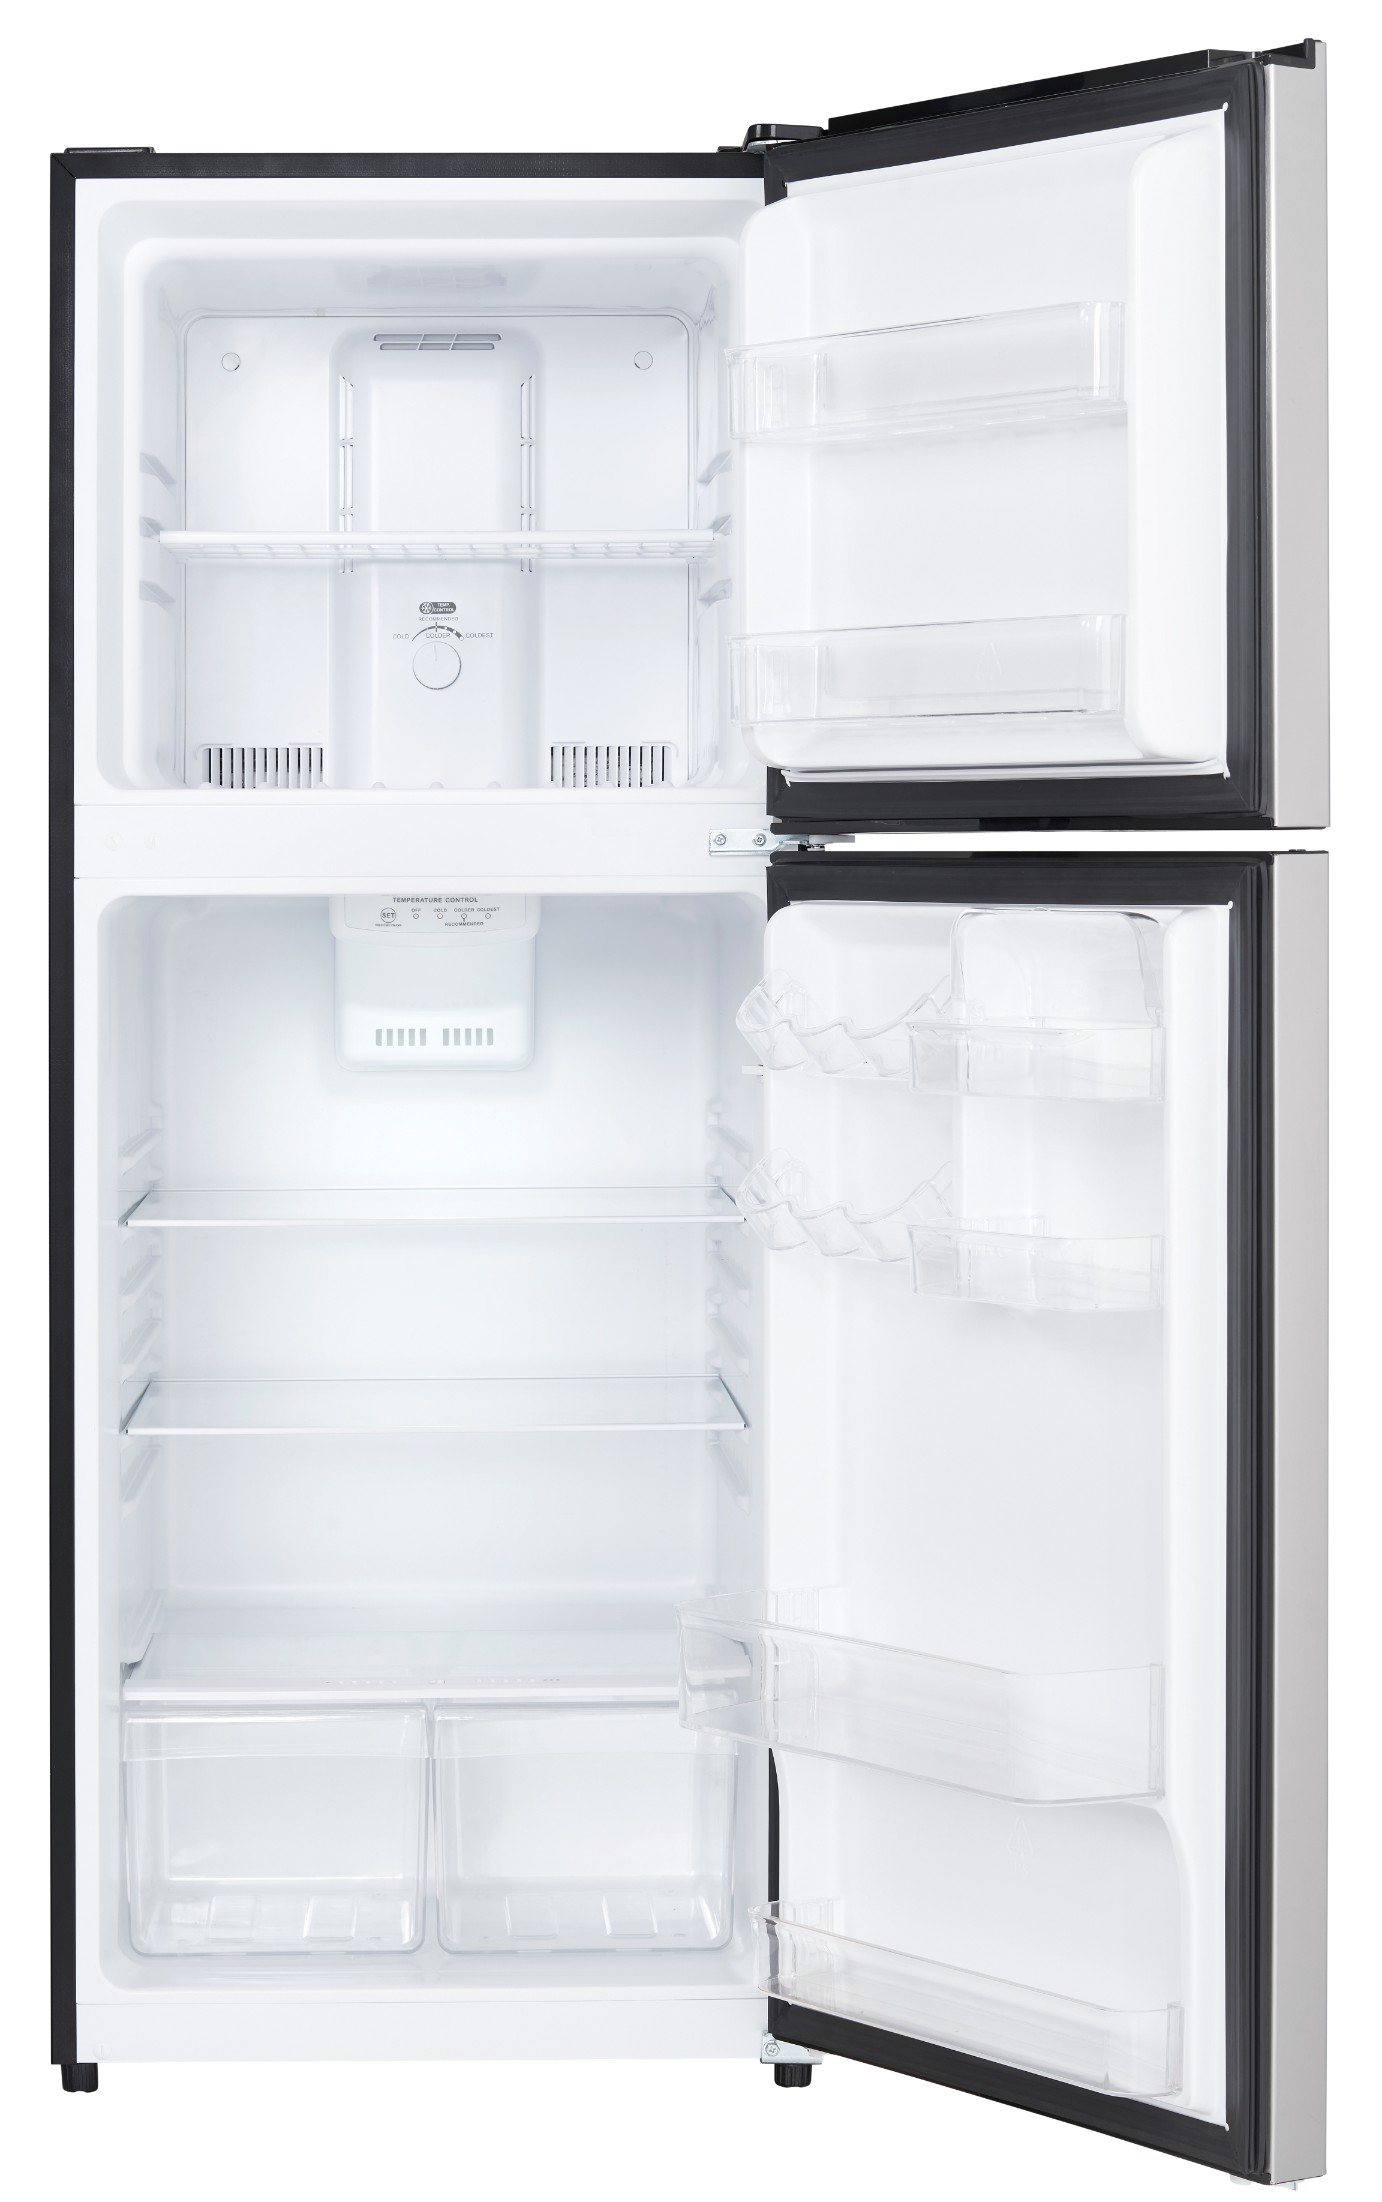 Danby 10.1 cu. ft. Apartment Size Refrigerator